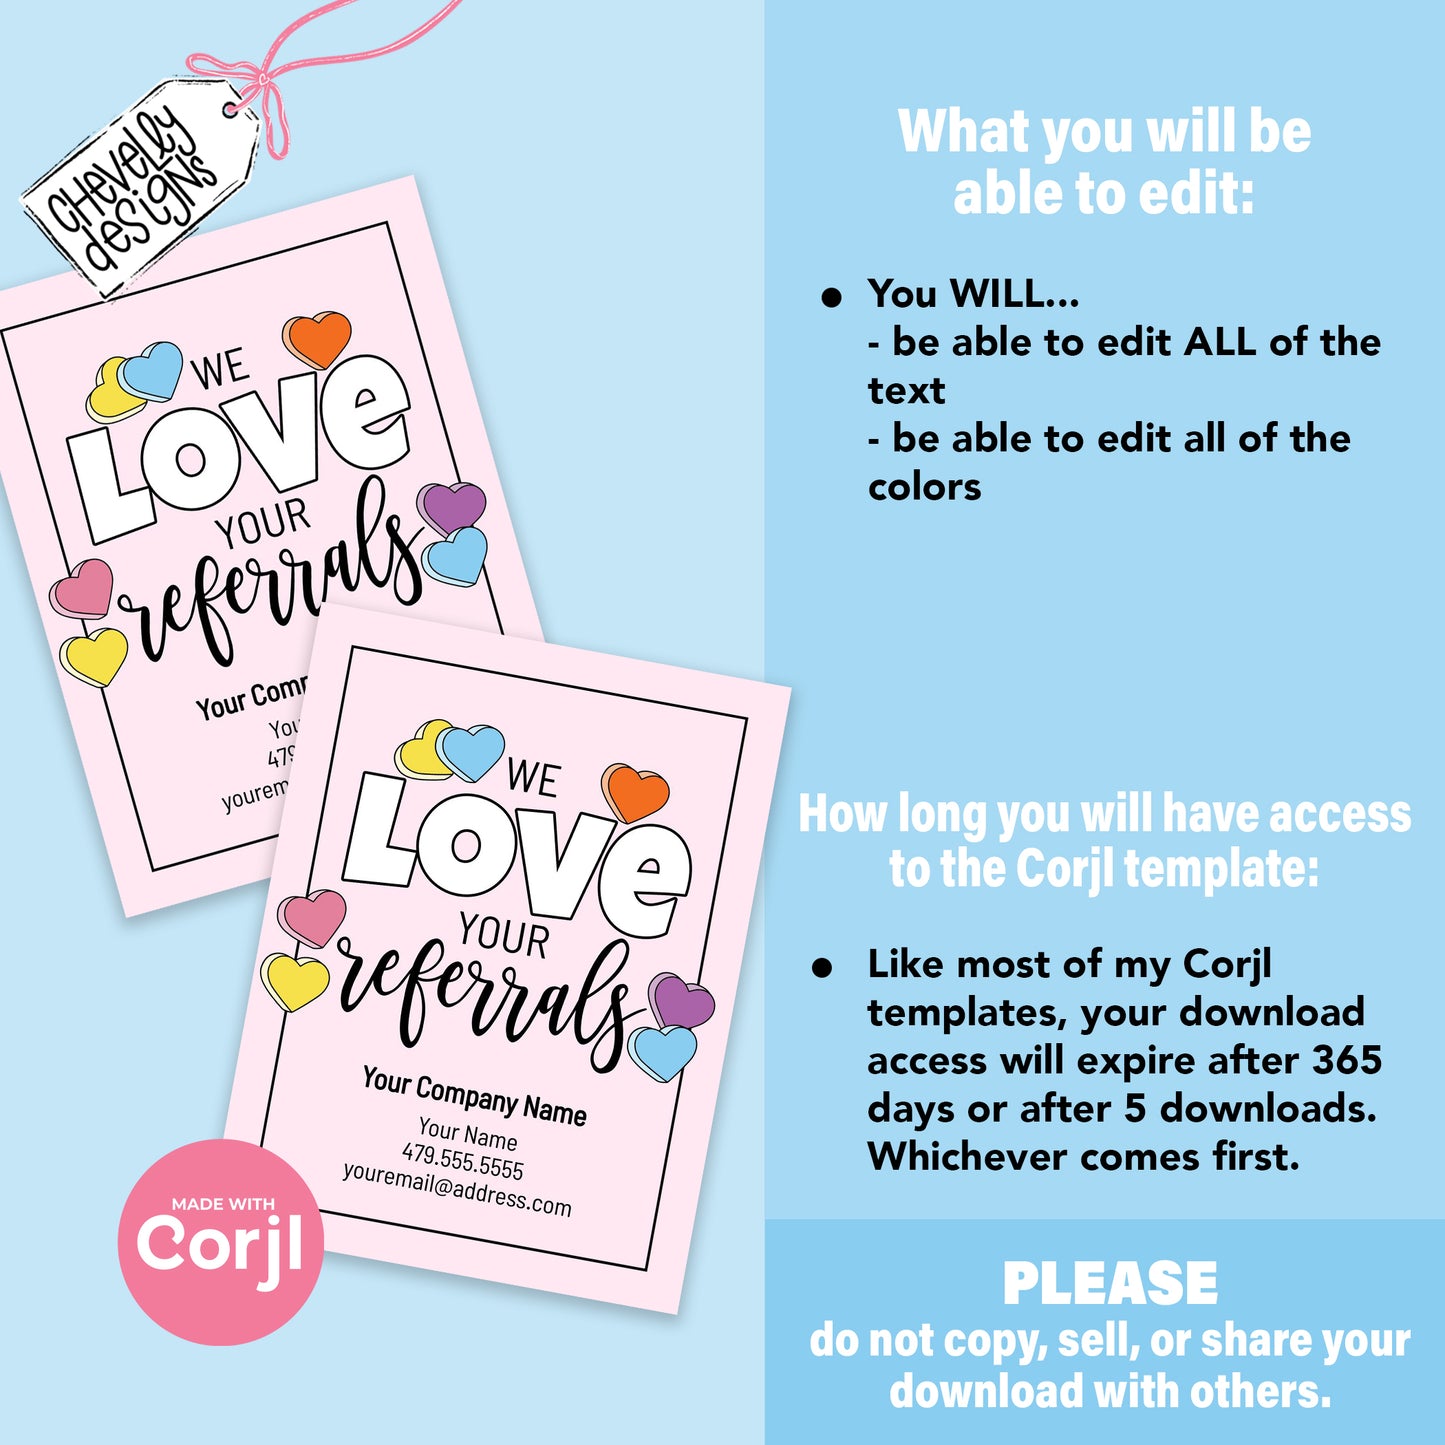 EDITABLE - We Love Your Referrals - Valentine Healthcare Marketing Gift Tag - Printable Digital File